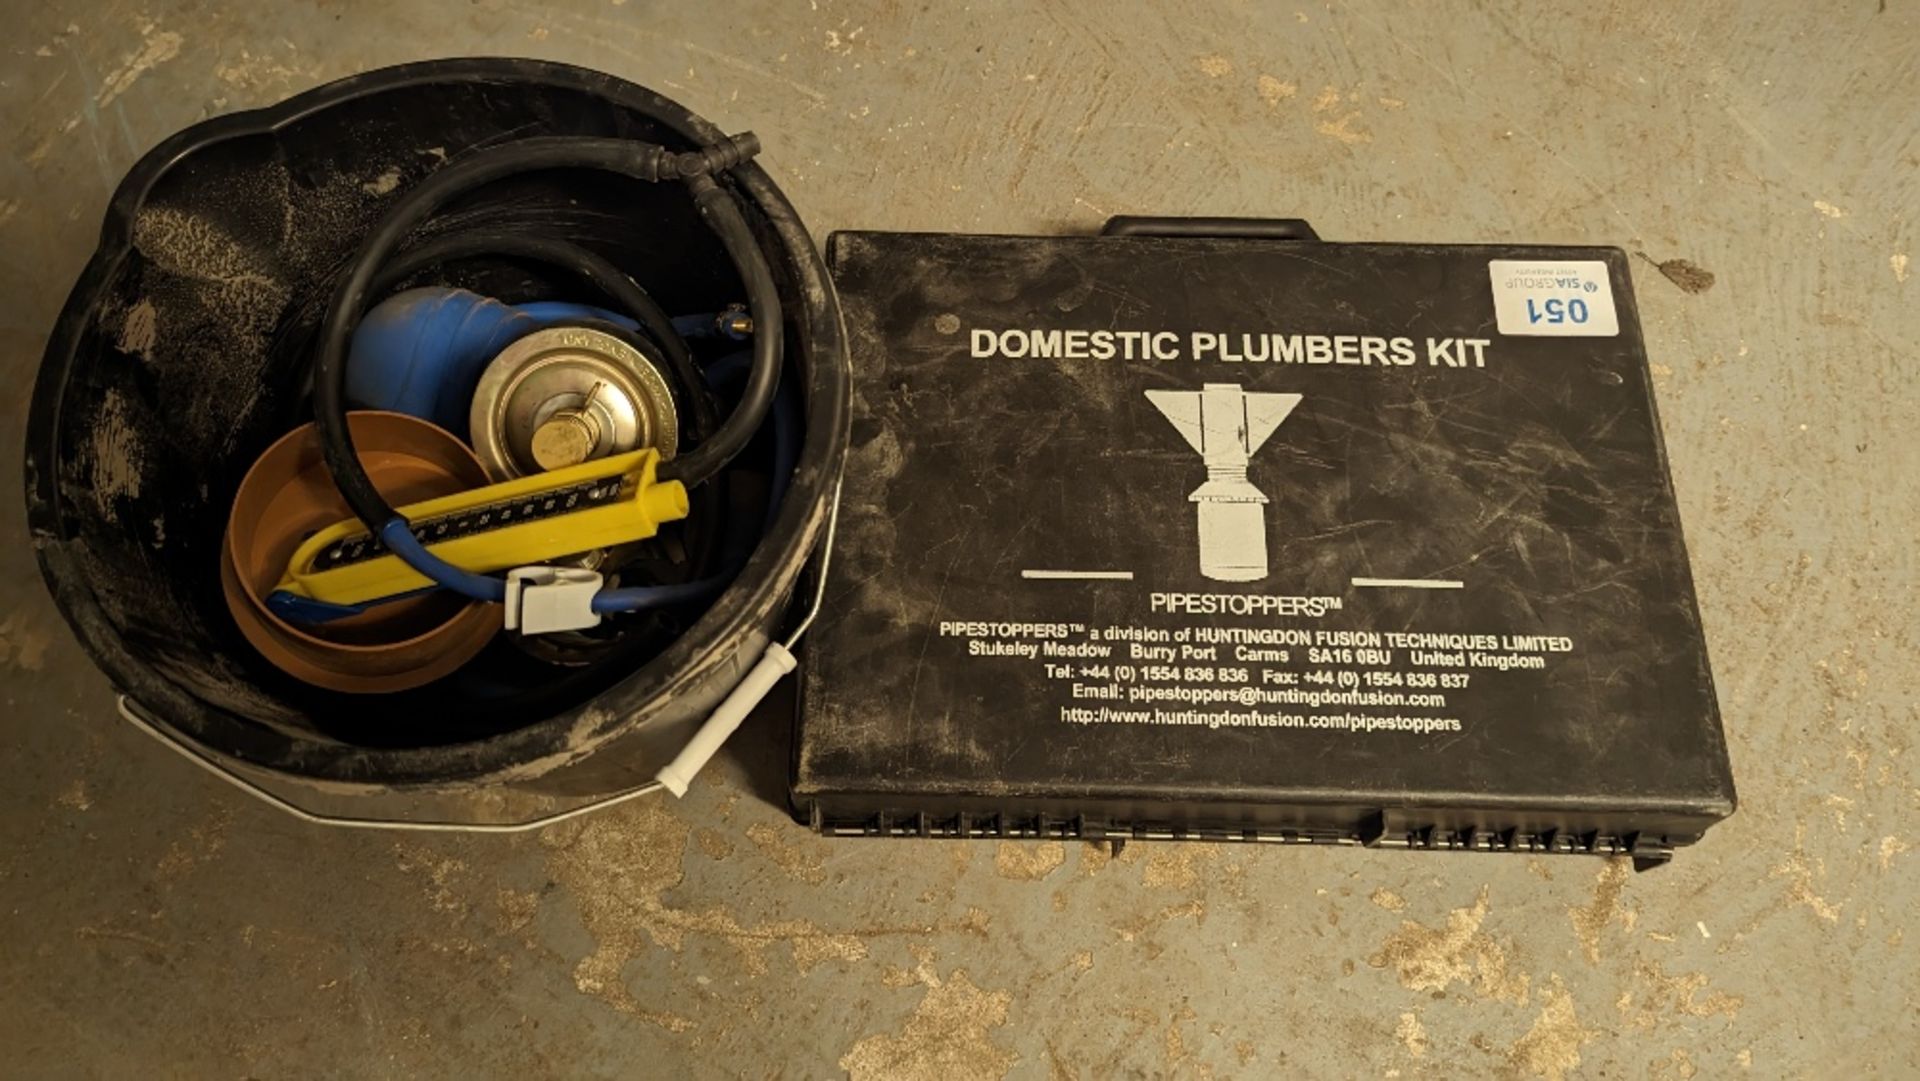 Pipestoppers domestic plumbers kit - Bild 4 aus 4